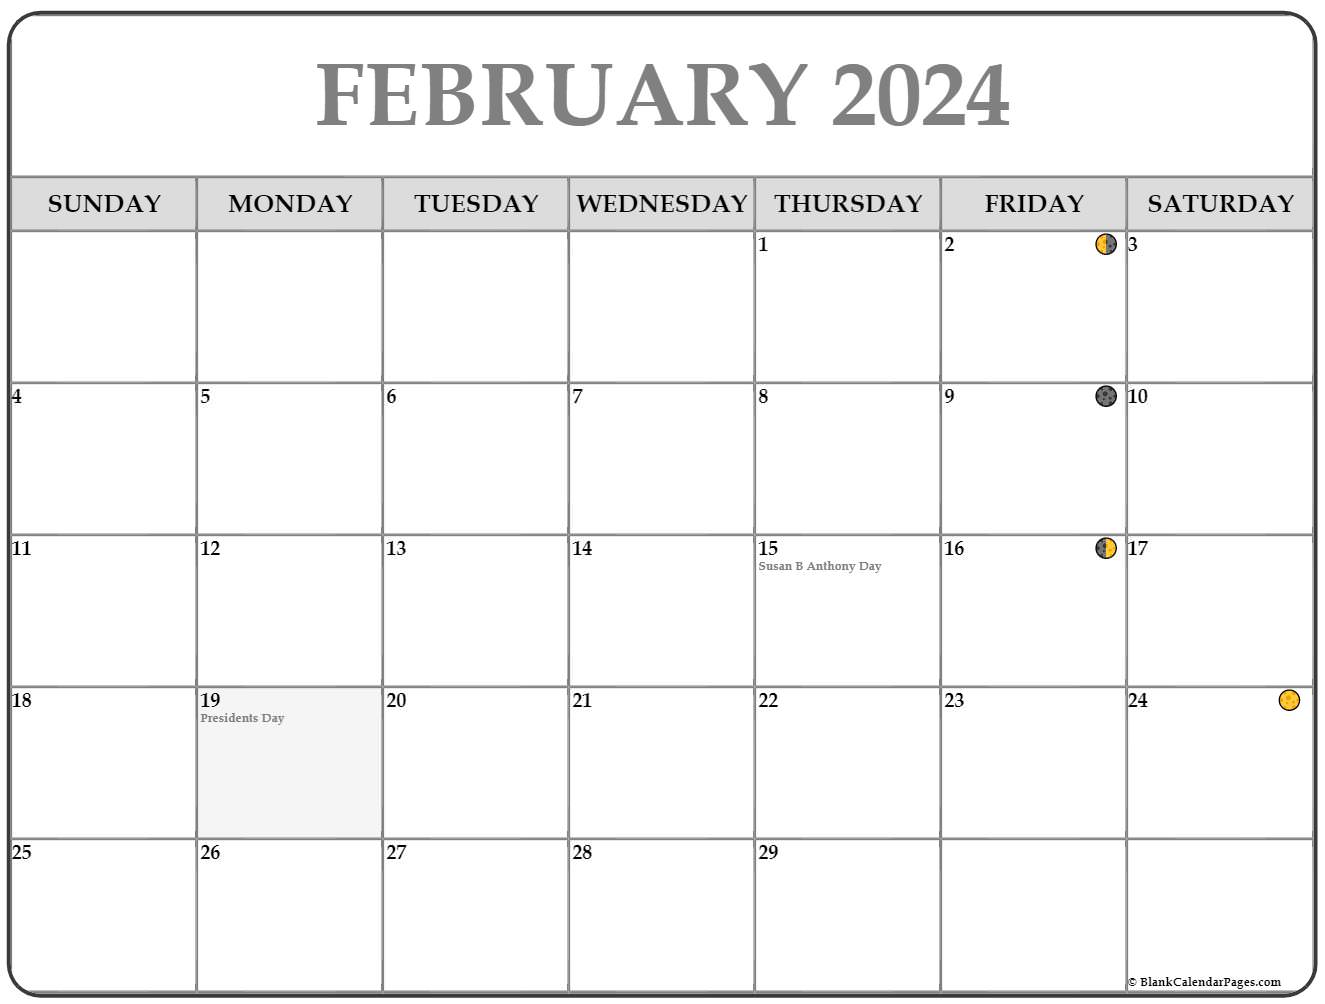 February Lunar Calendar 2022 February 2022 Lunar Calendar | Moon Phase Calendar